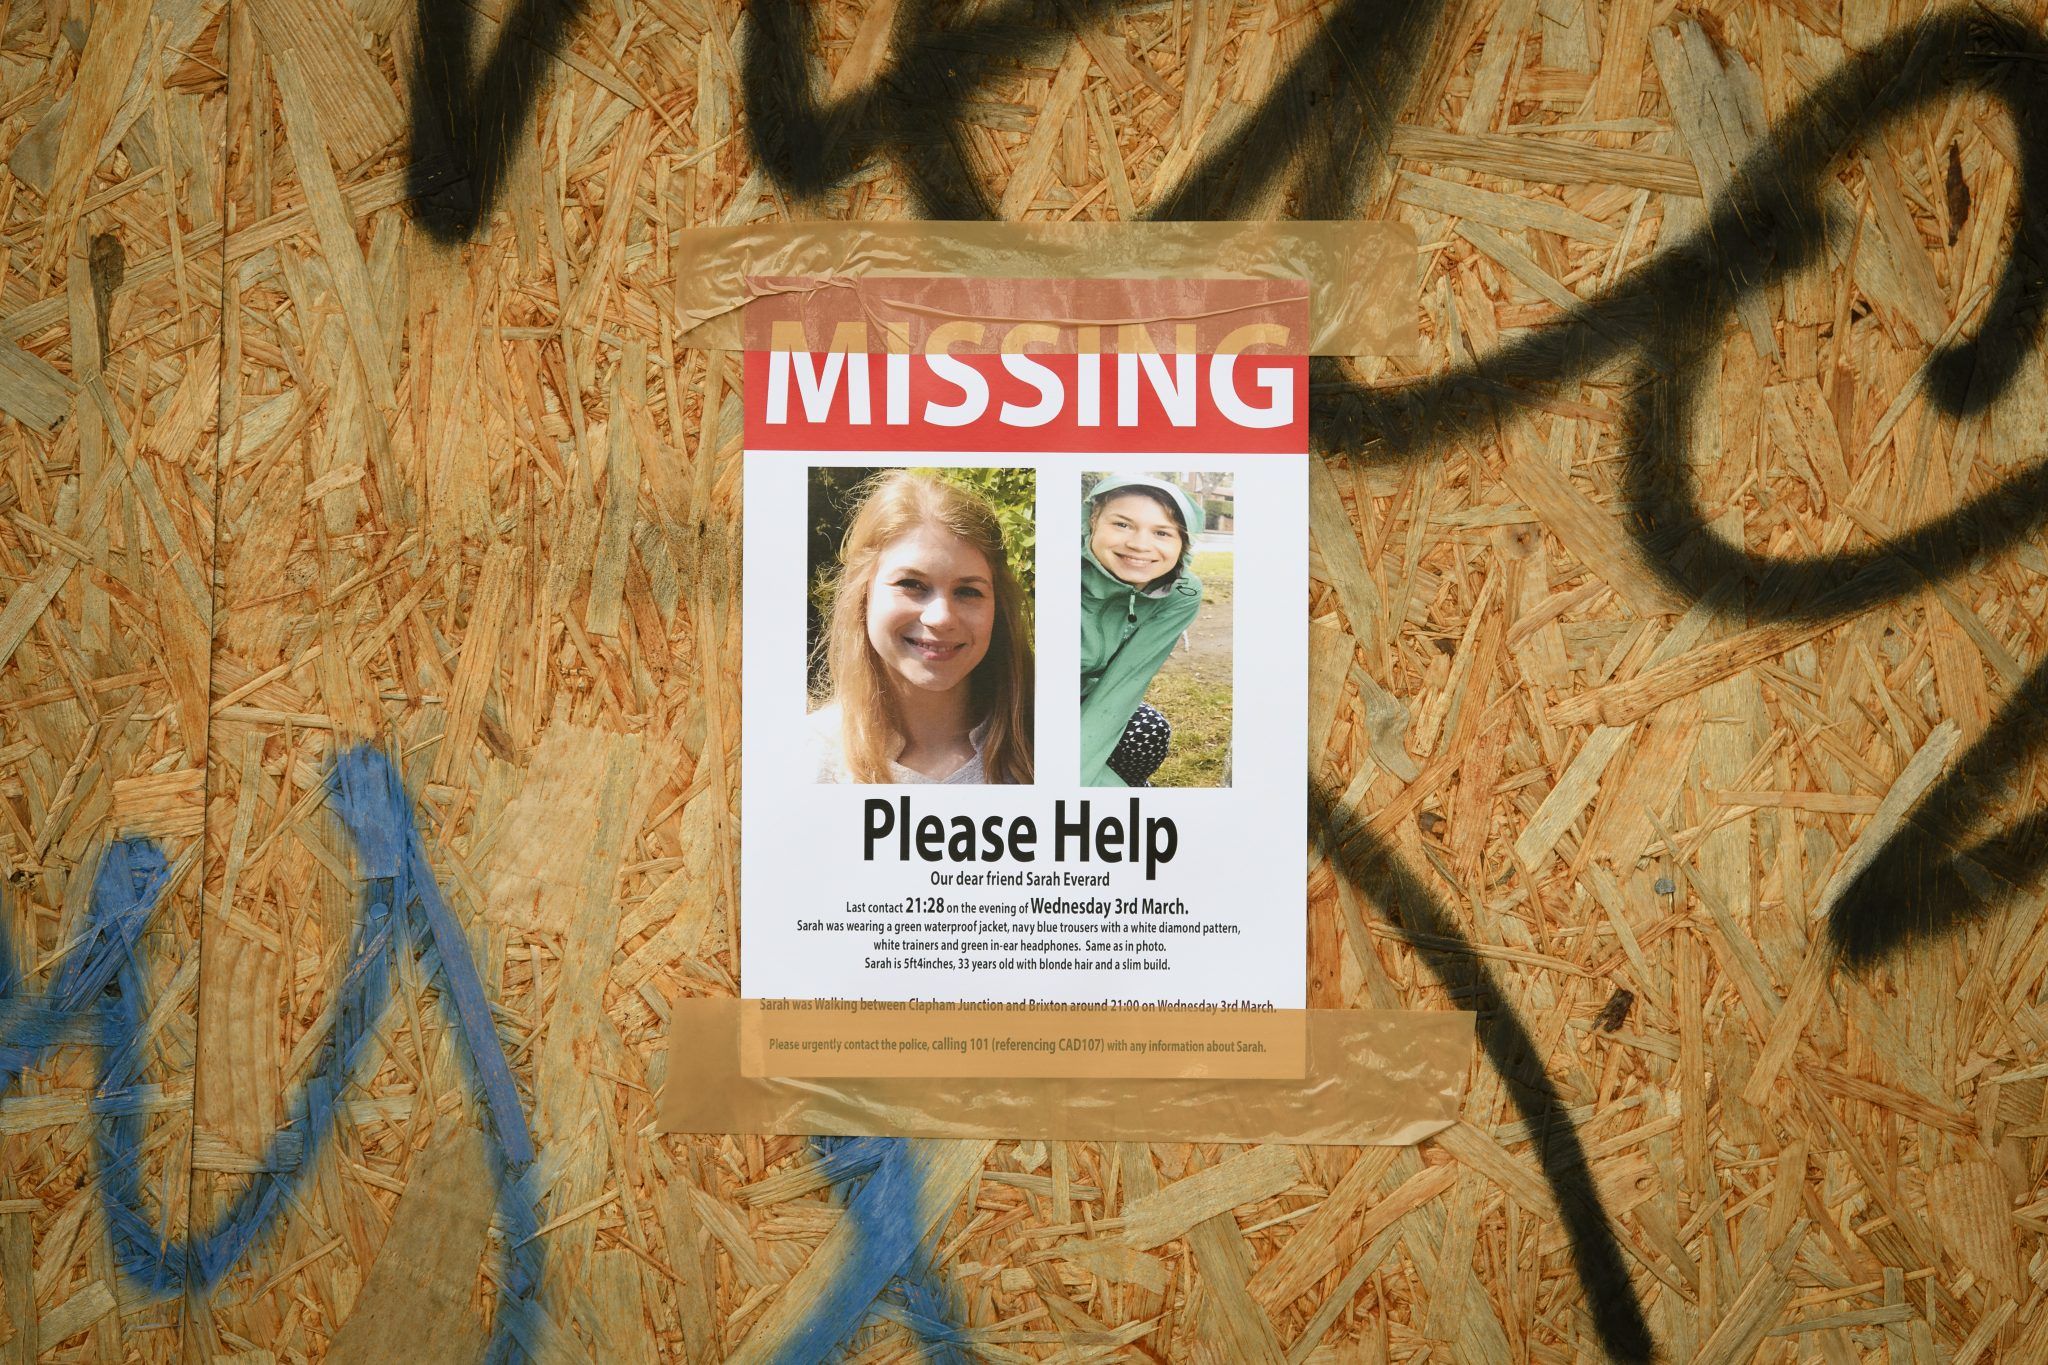 Sarah Everard "Missing - please help" sign